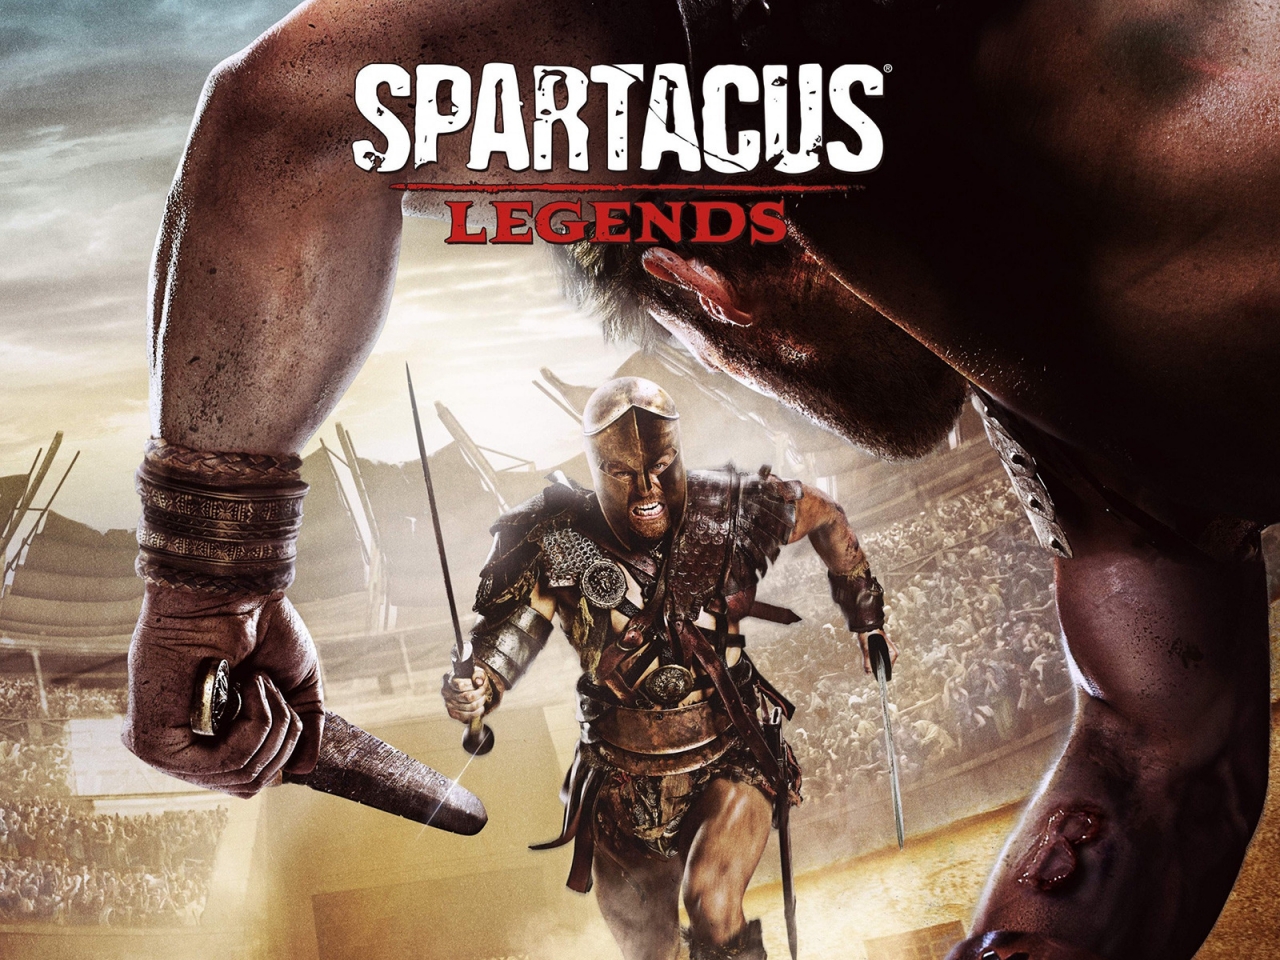 Spartacus Legends for 1280 x 960 resolution